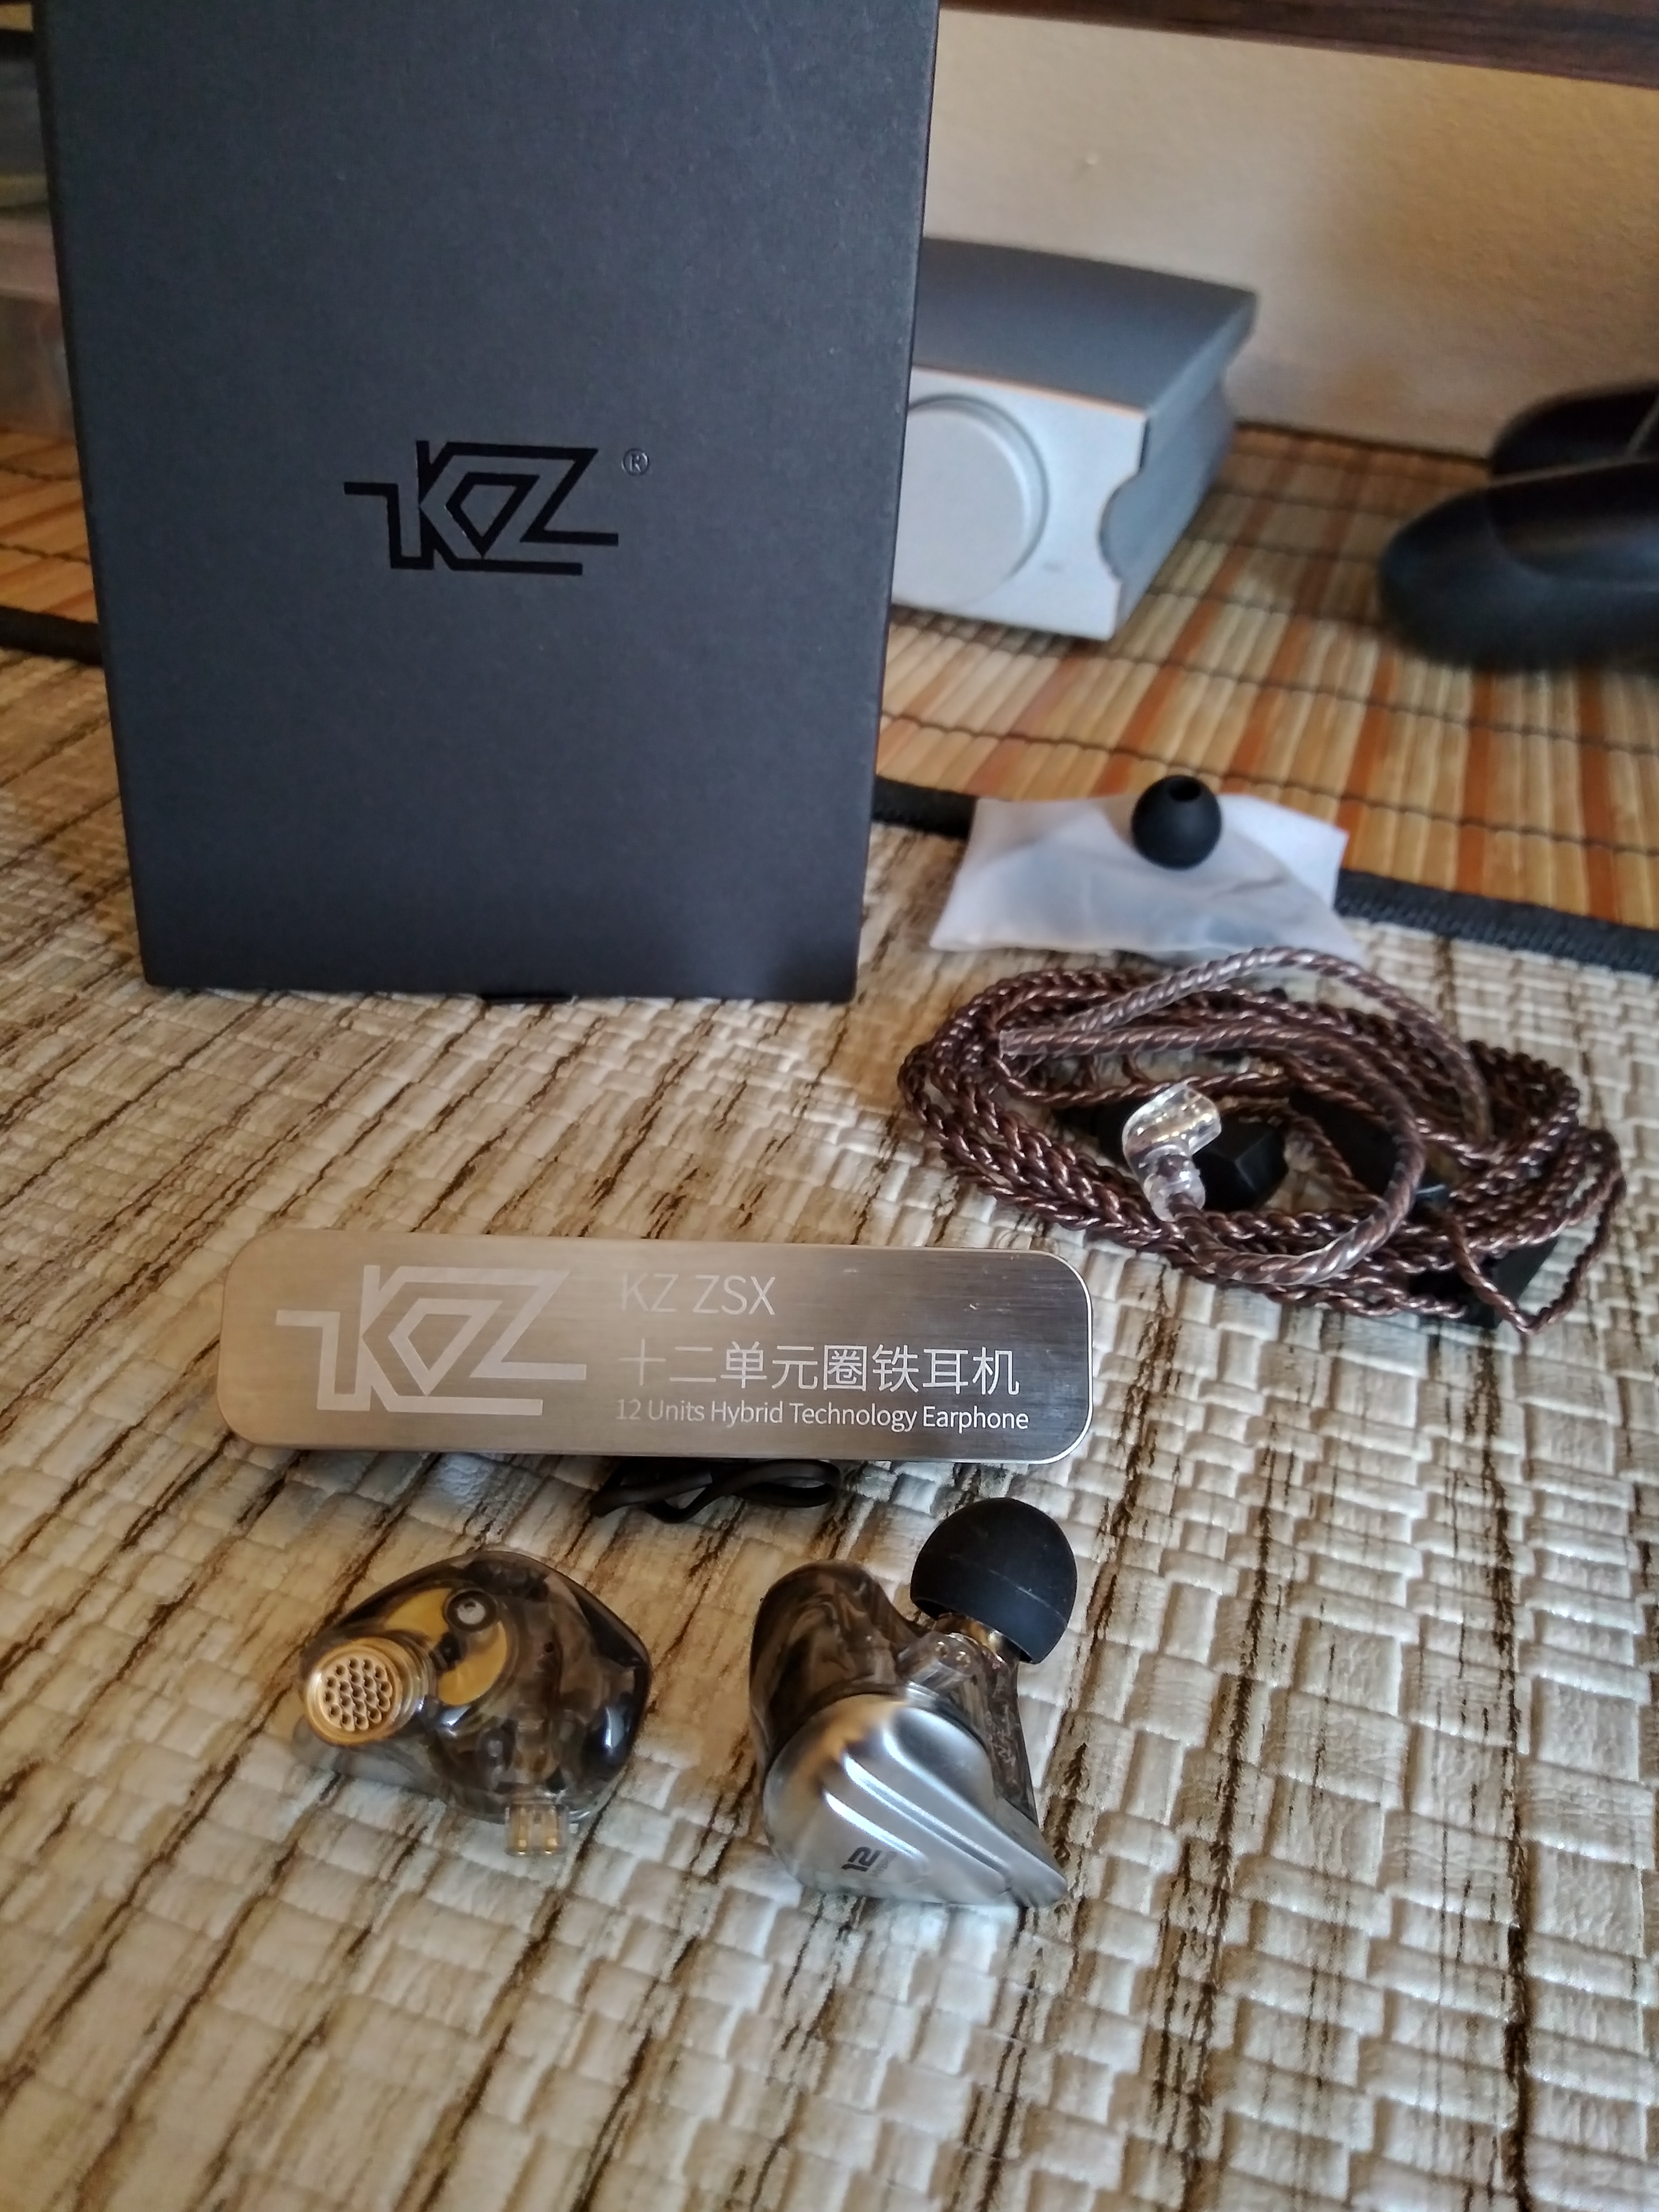 Kz Zsx Terminator Headphones And Coffee